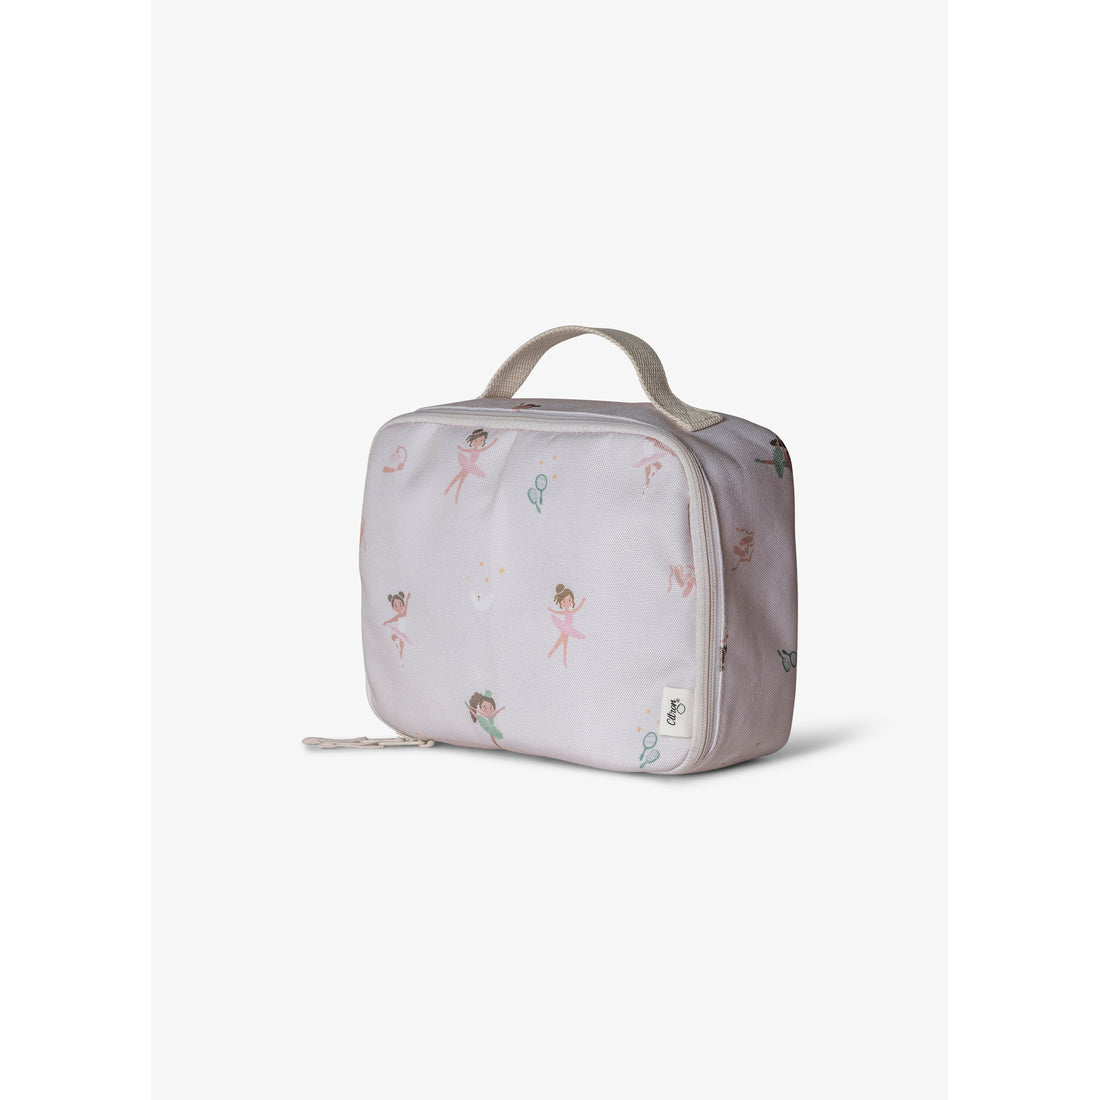 citron-insulated-square-lunch-bag-ballerina-citr-60223